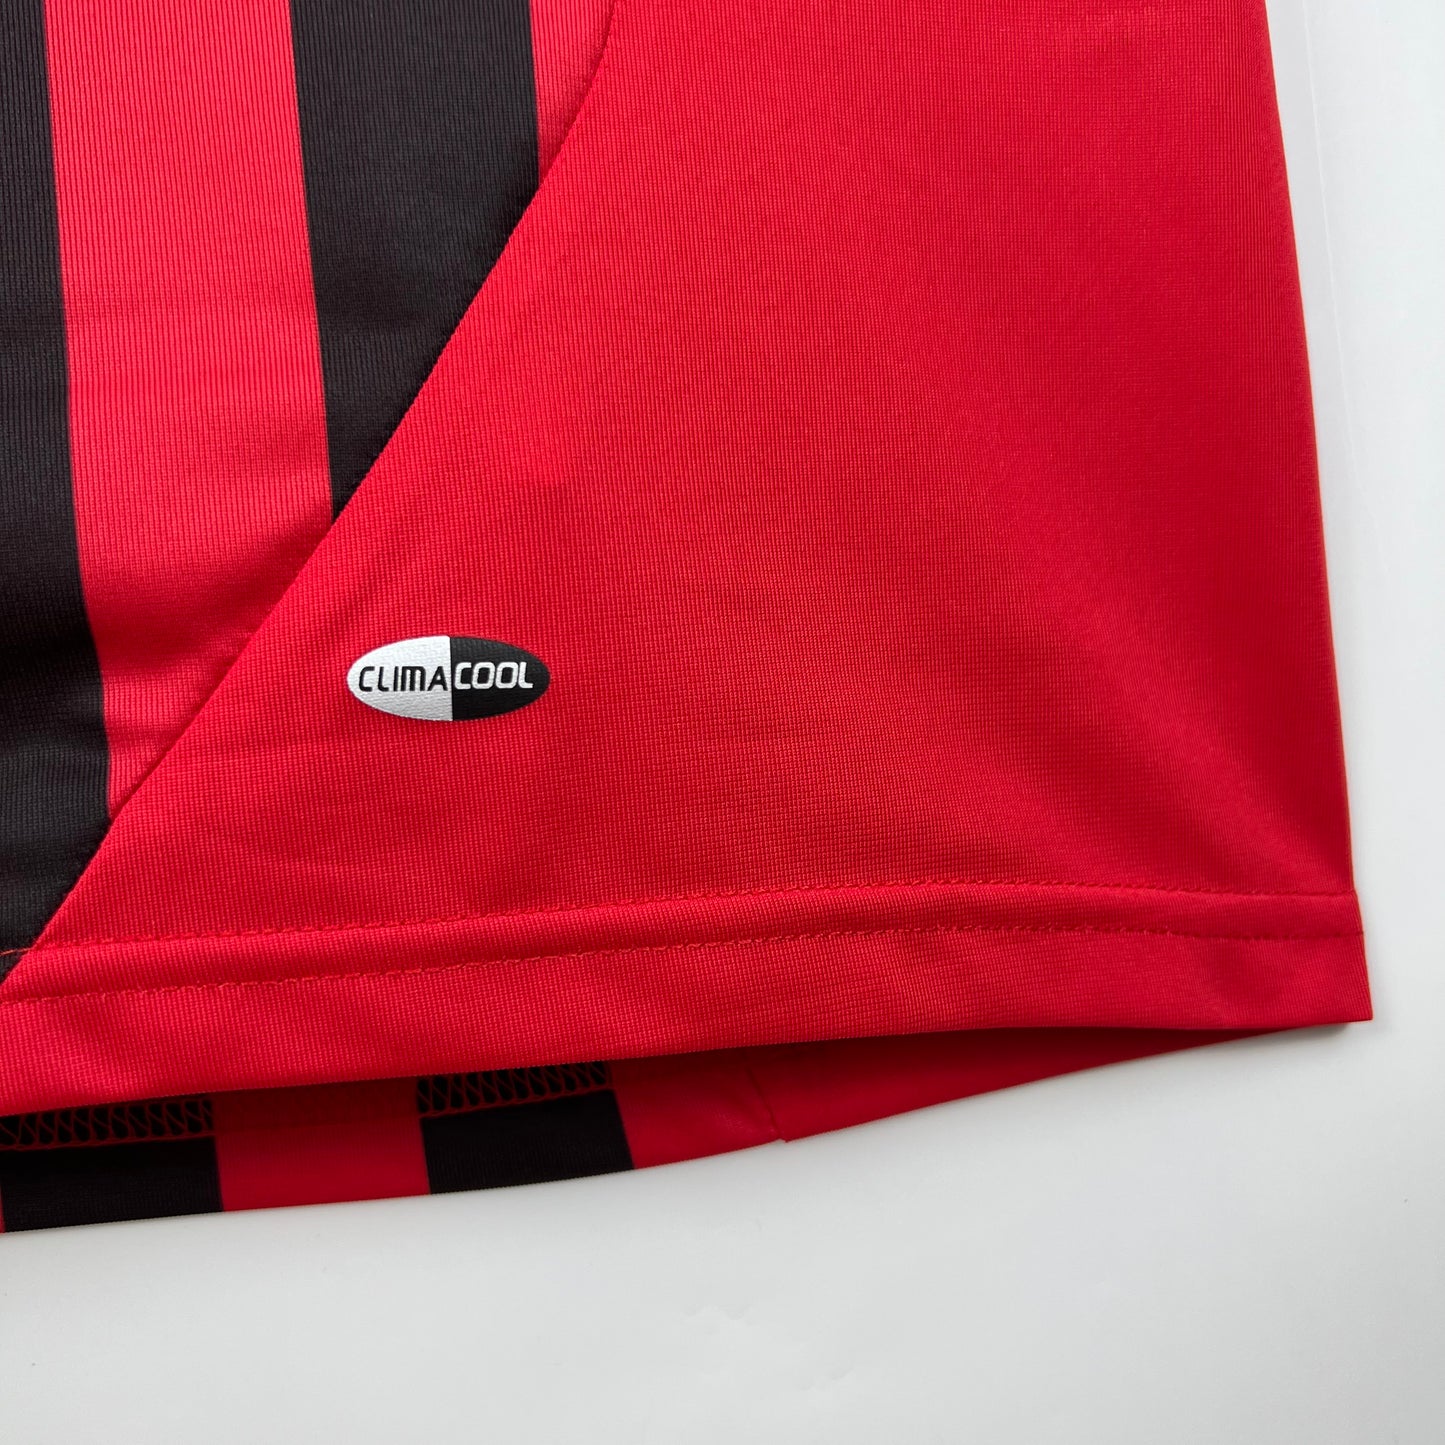 Retro AC Milan 07/08 Home Kit